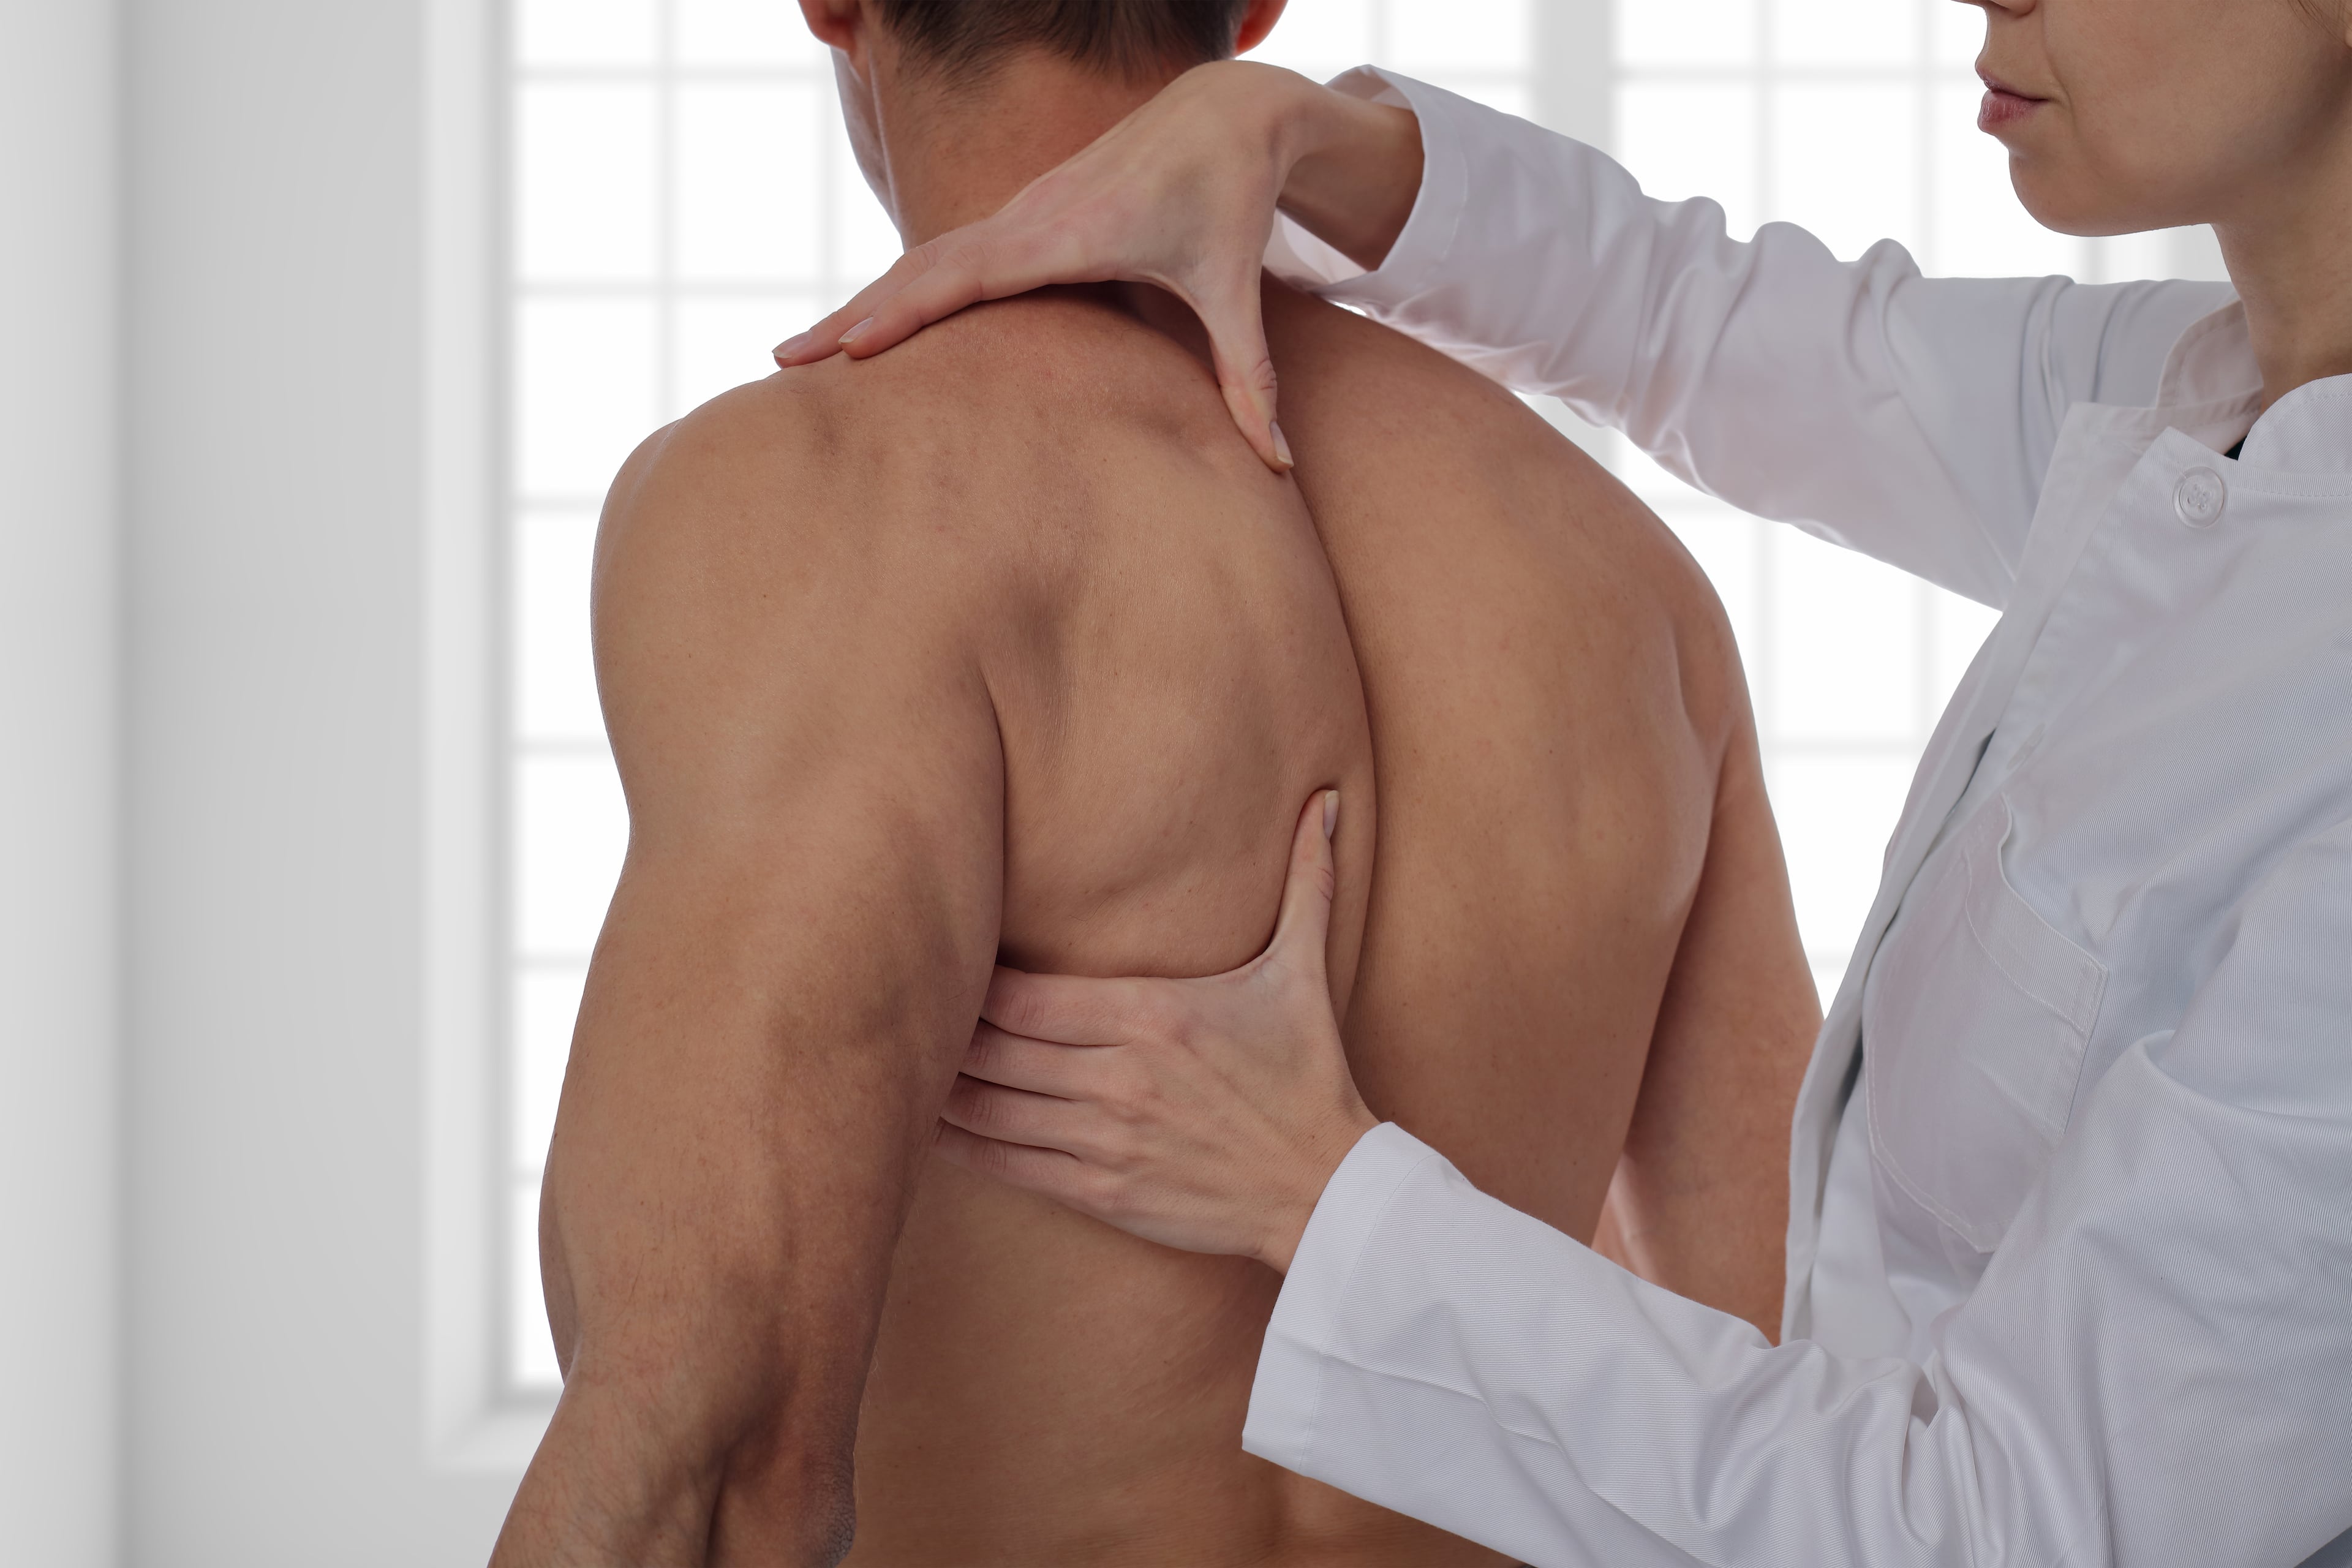 Мануальный массаж спины. Мануальная терапия поясницы. Врач остеопат. Остеопатия позвоночник. Остеопатия спины.